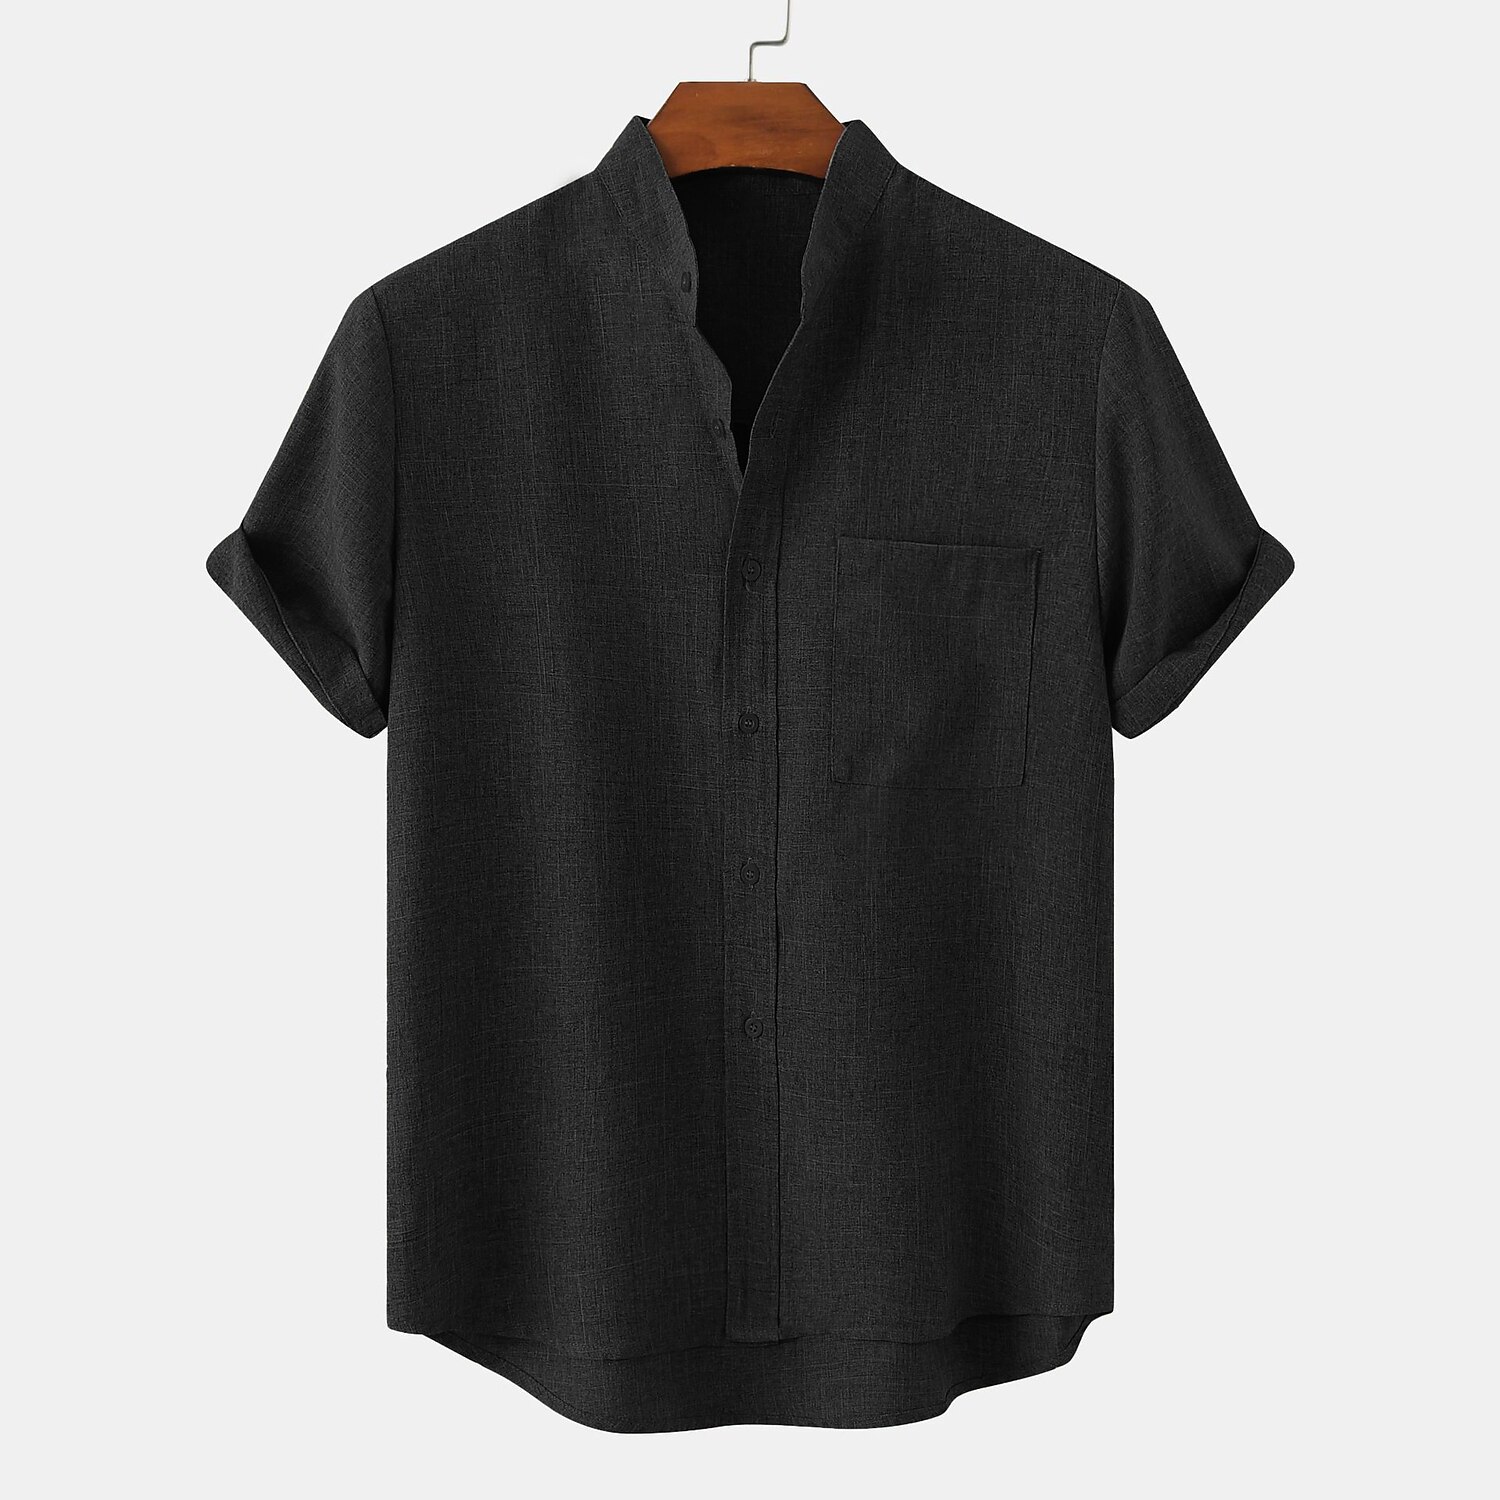 Men's Linen Shirt Casual Shirt Black White Yellow Short Sleeve Plain Henley Spring & Summer Hawaiian Holiday Clothing Apparel Front Pocket